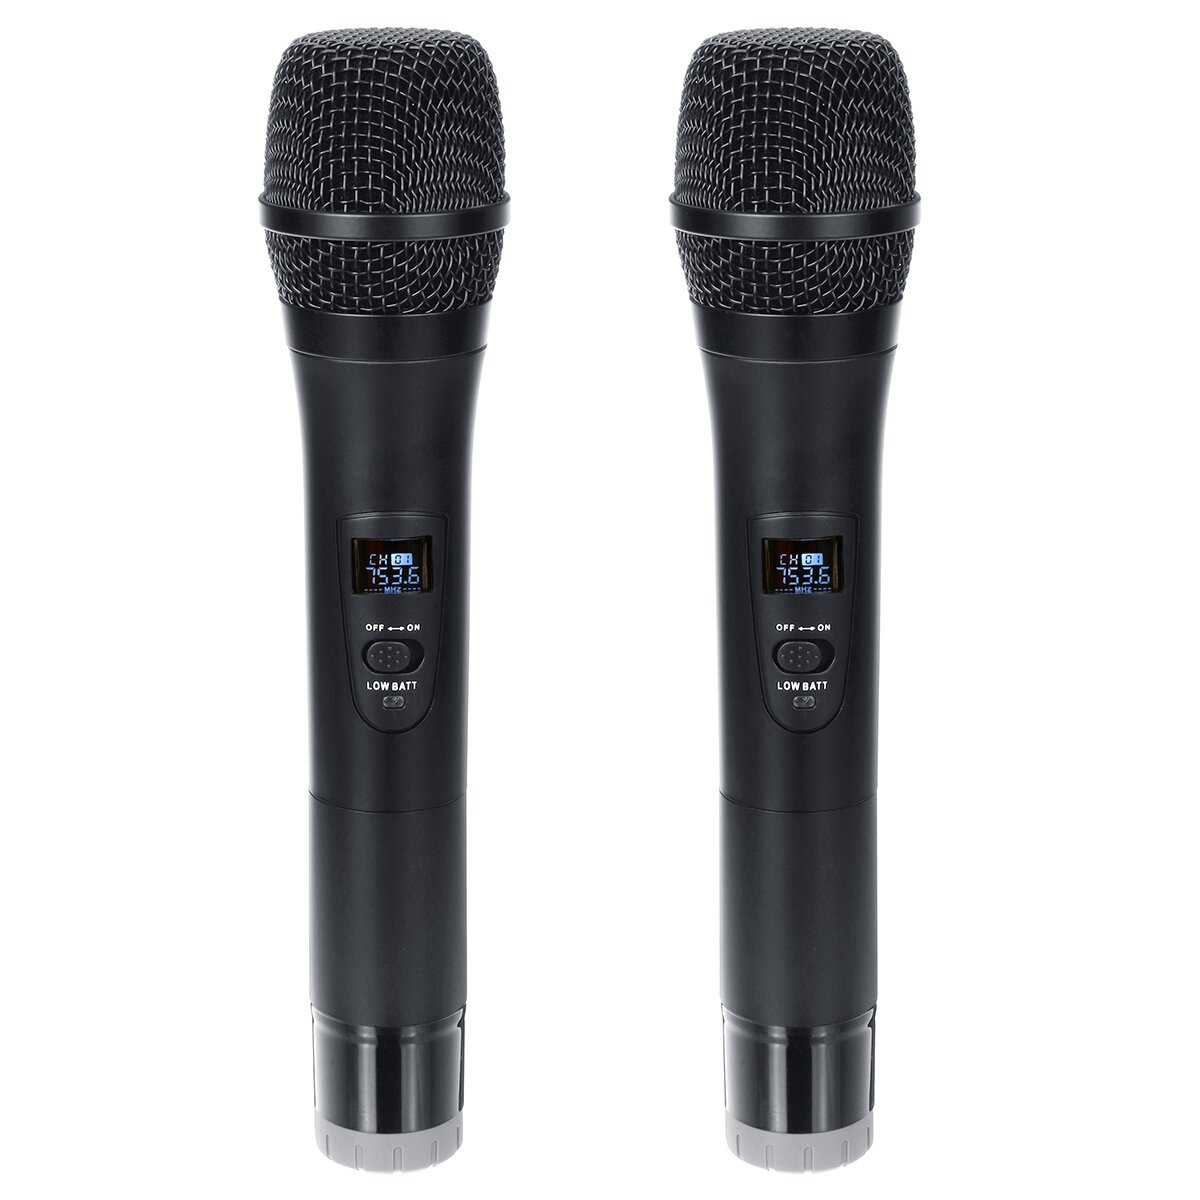 Professionele UHF dubbele draadloze handheld karaoke microfoon met 3,5 mm ontvanger